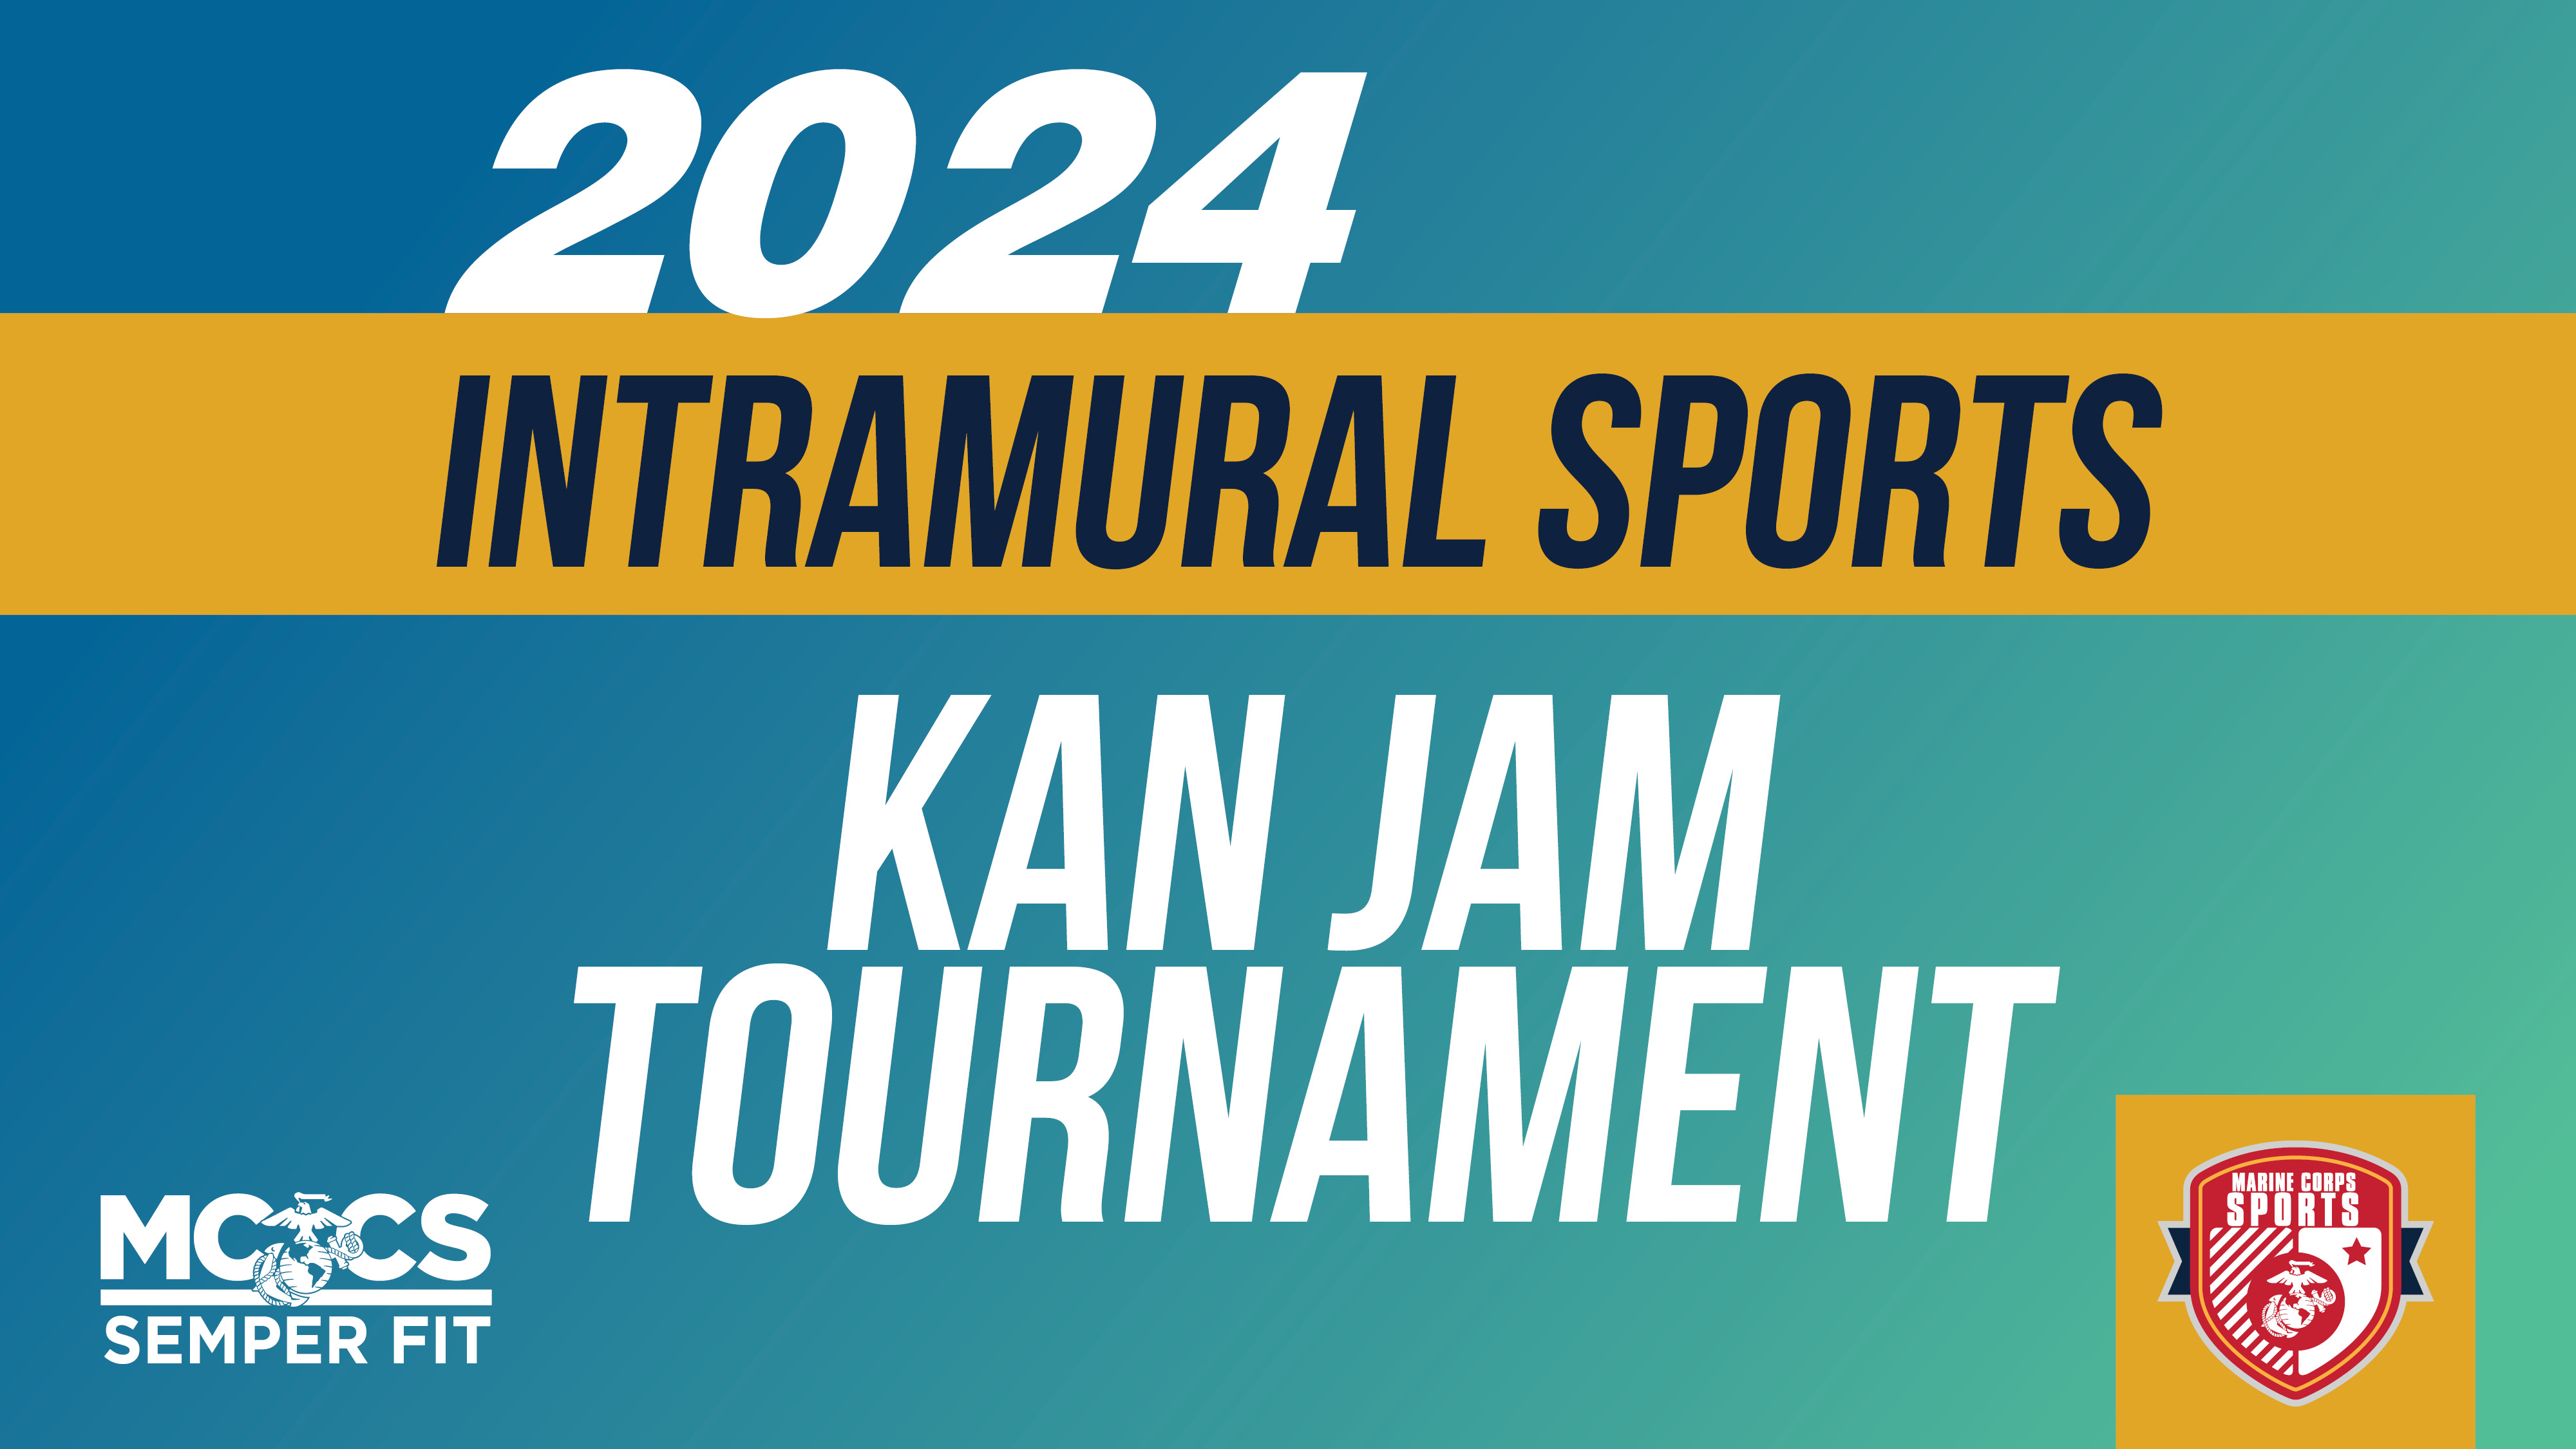 Kan Jam Tournament Registration